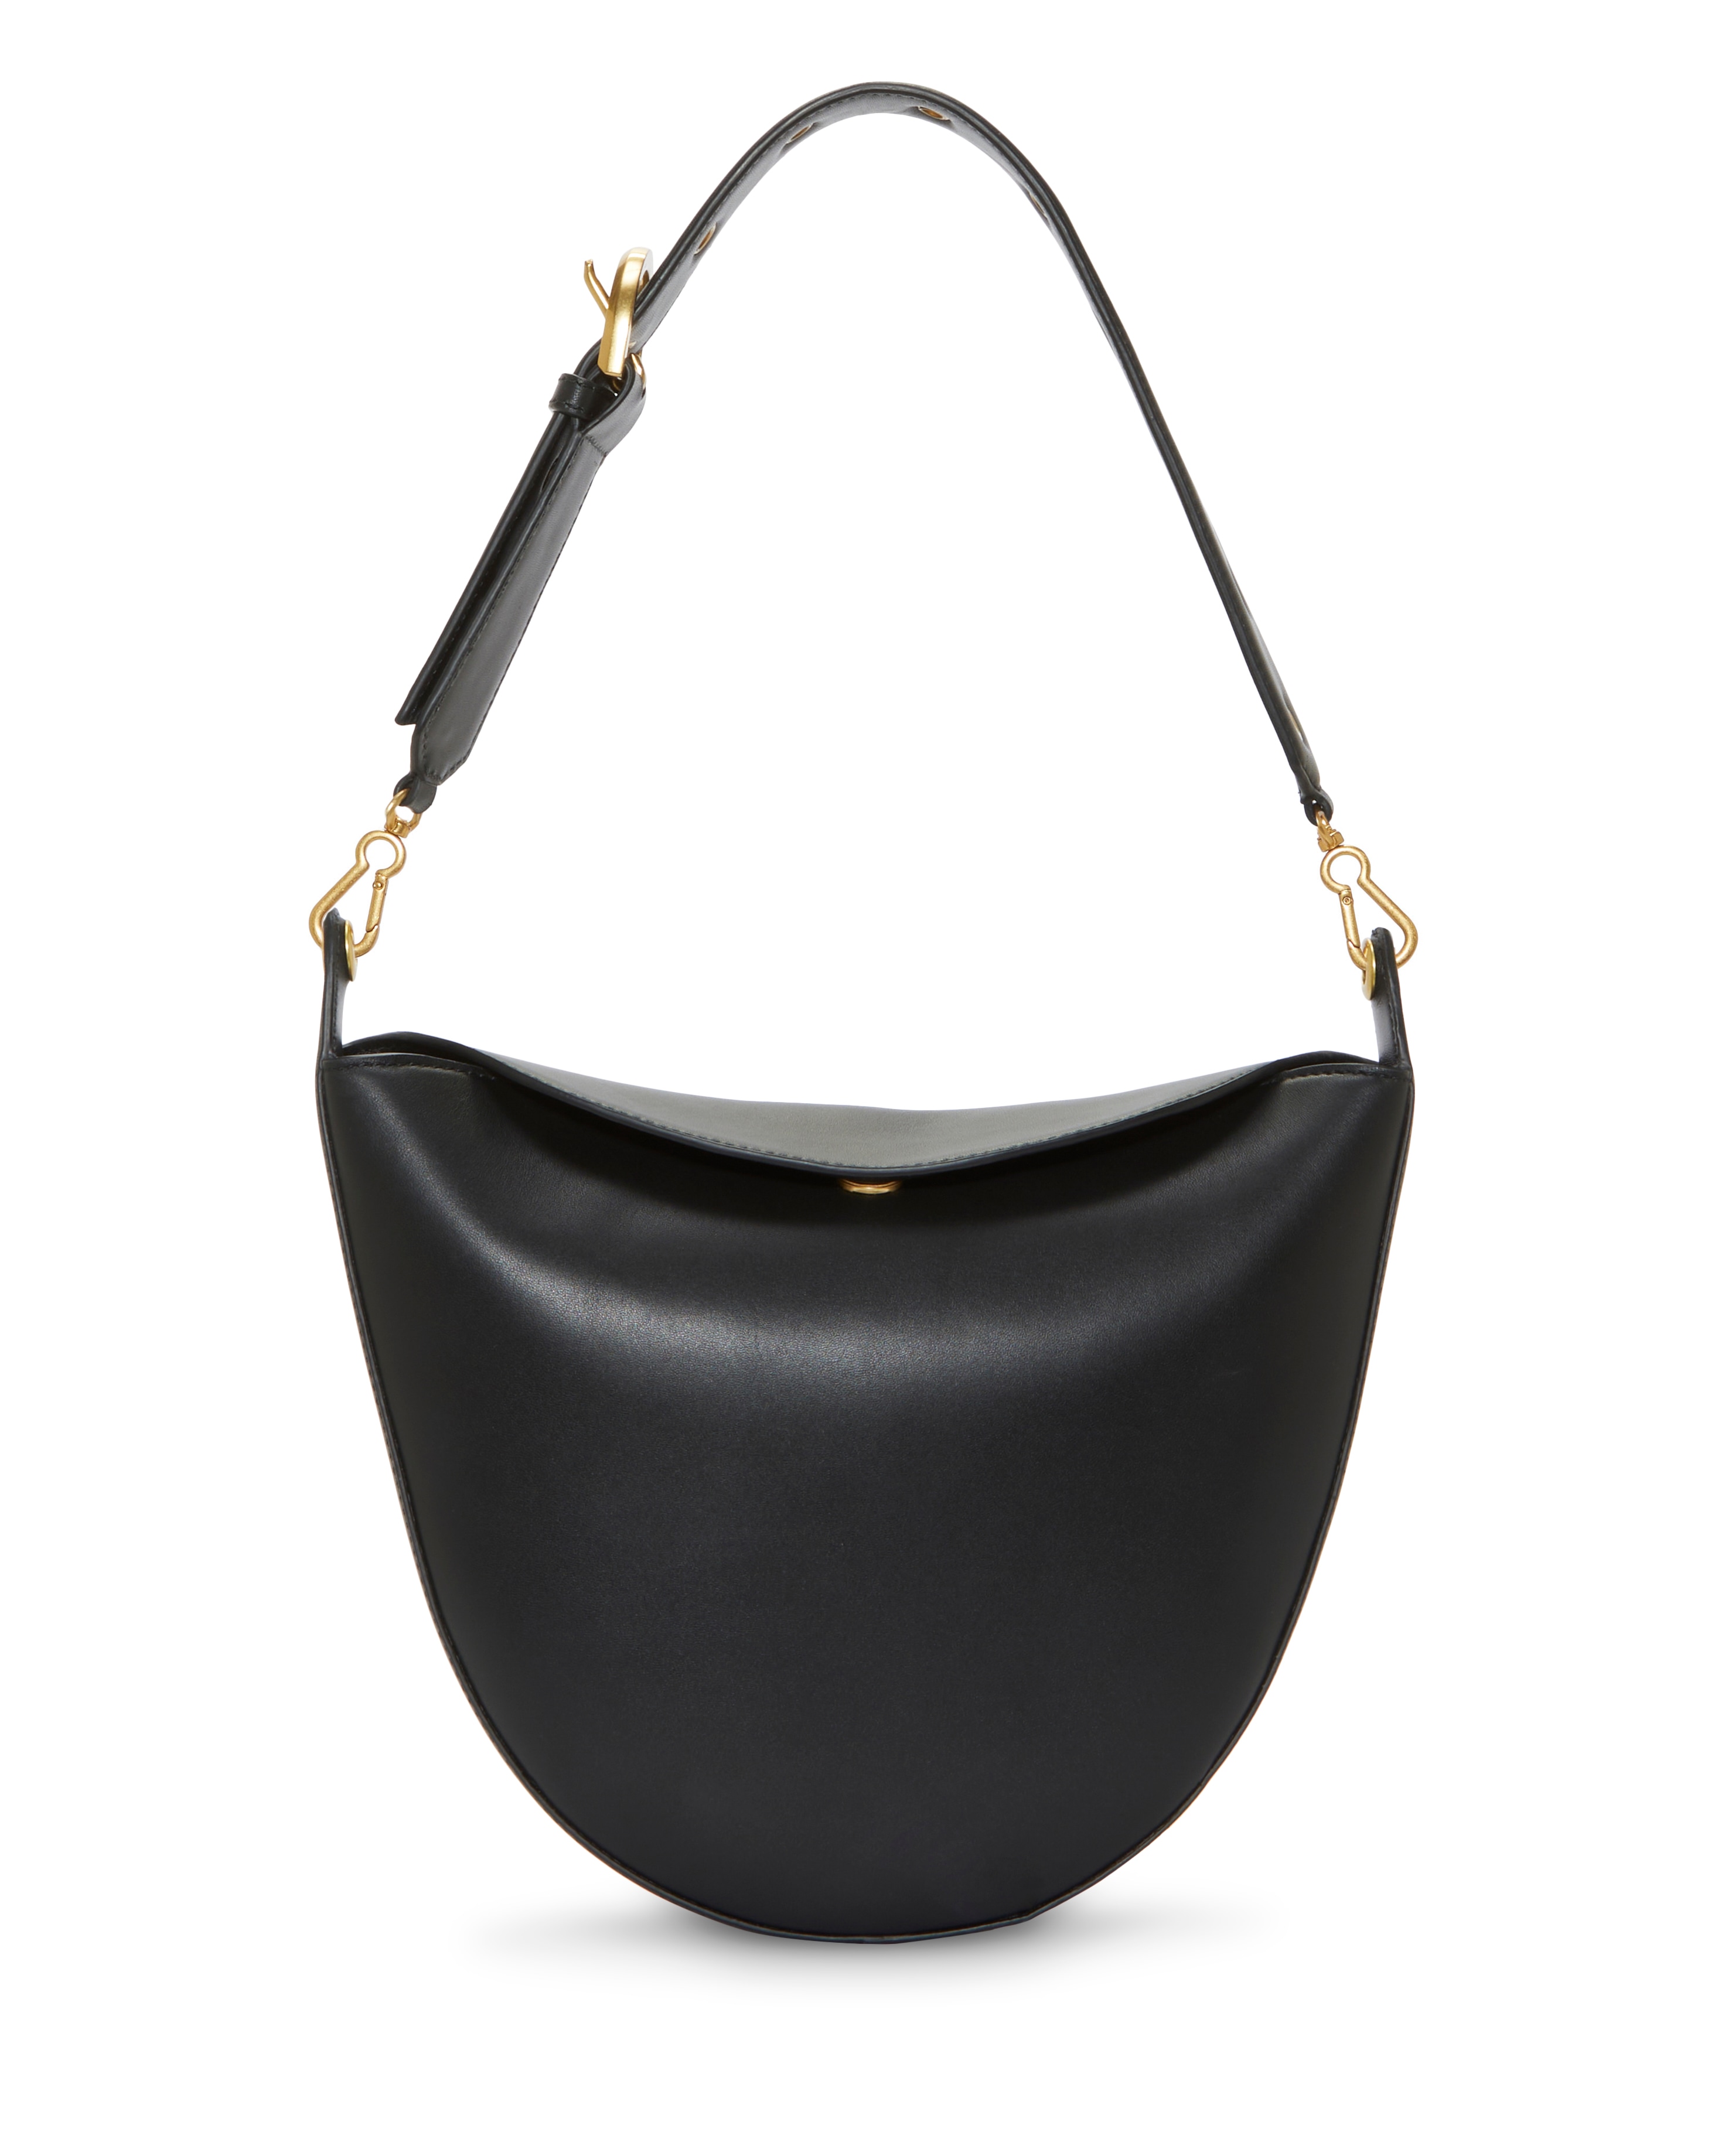 Handbag Designer By Vince Camuto Size: Medium